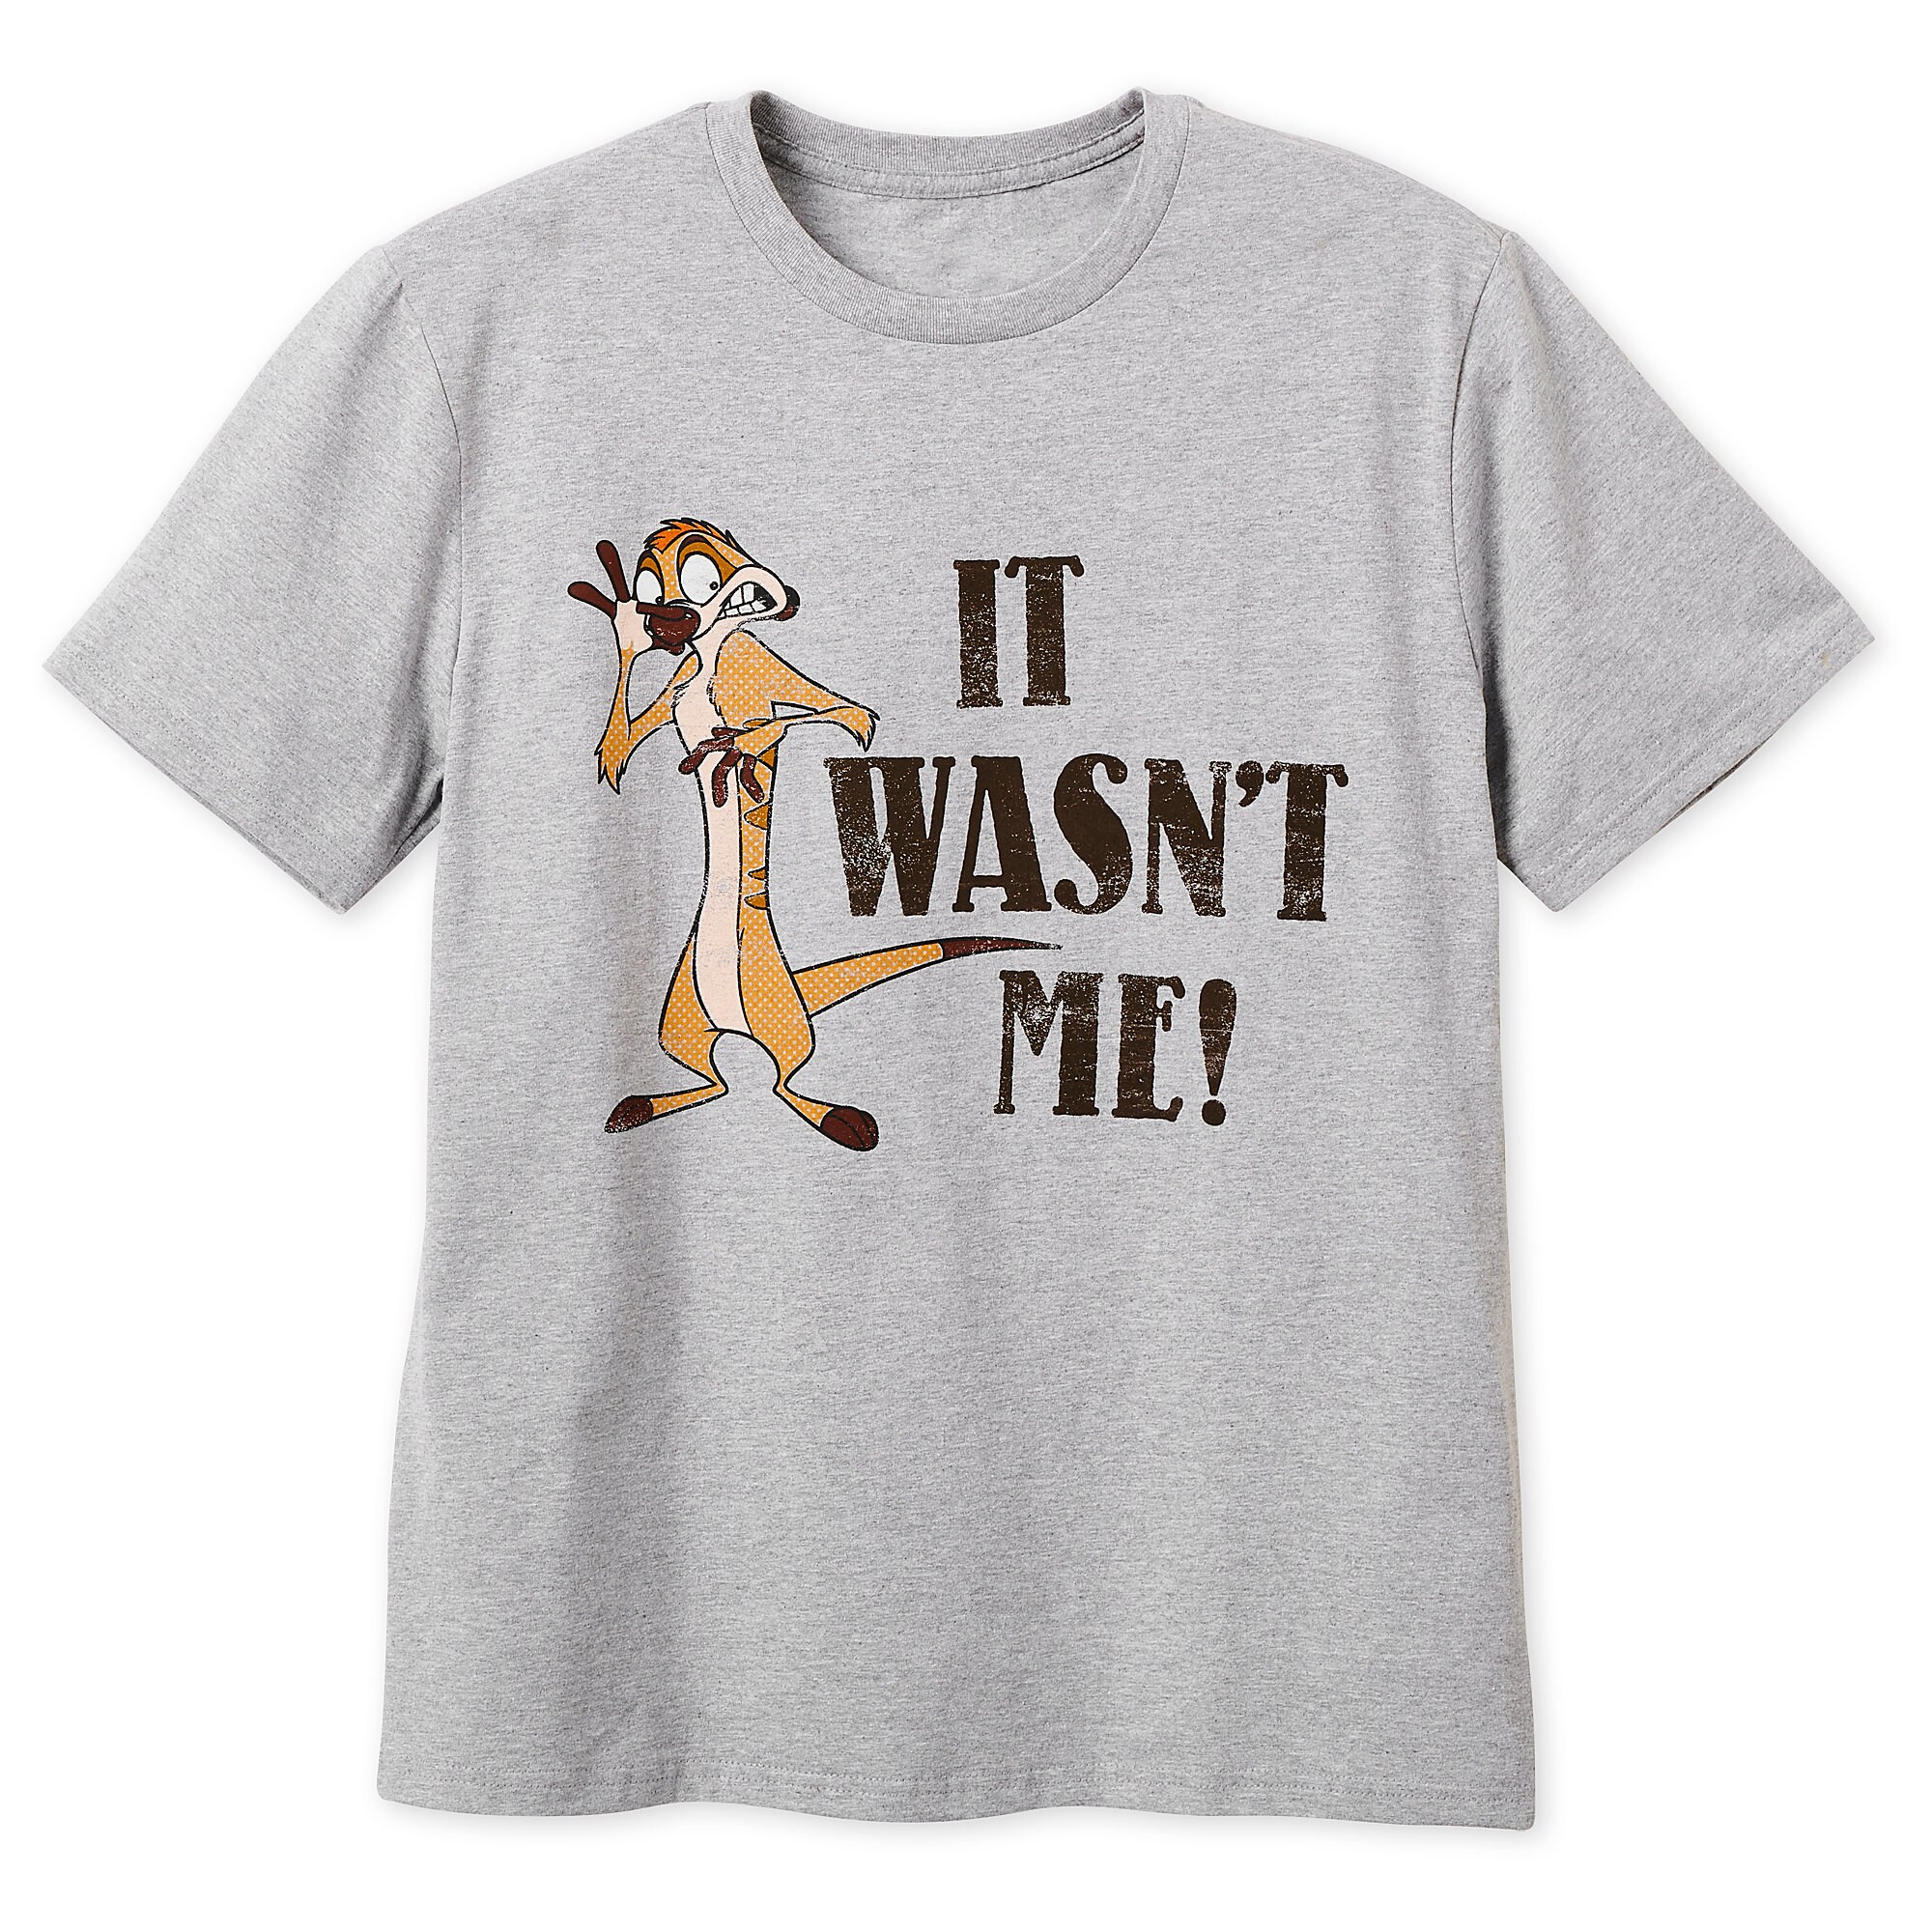 Timon and Pumbaa T-Shirt for Men